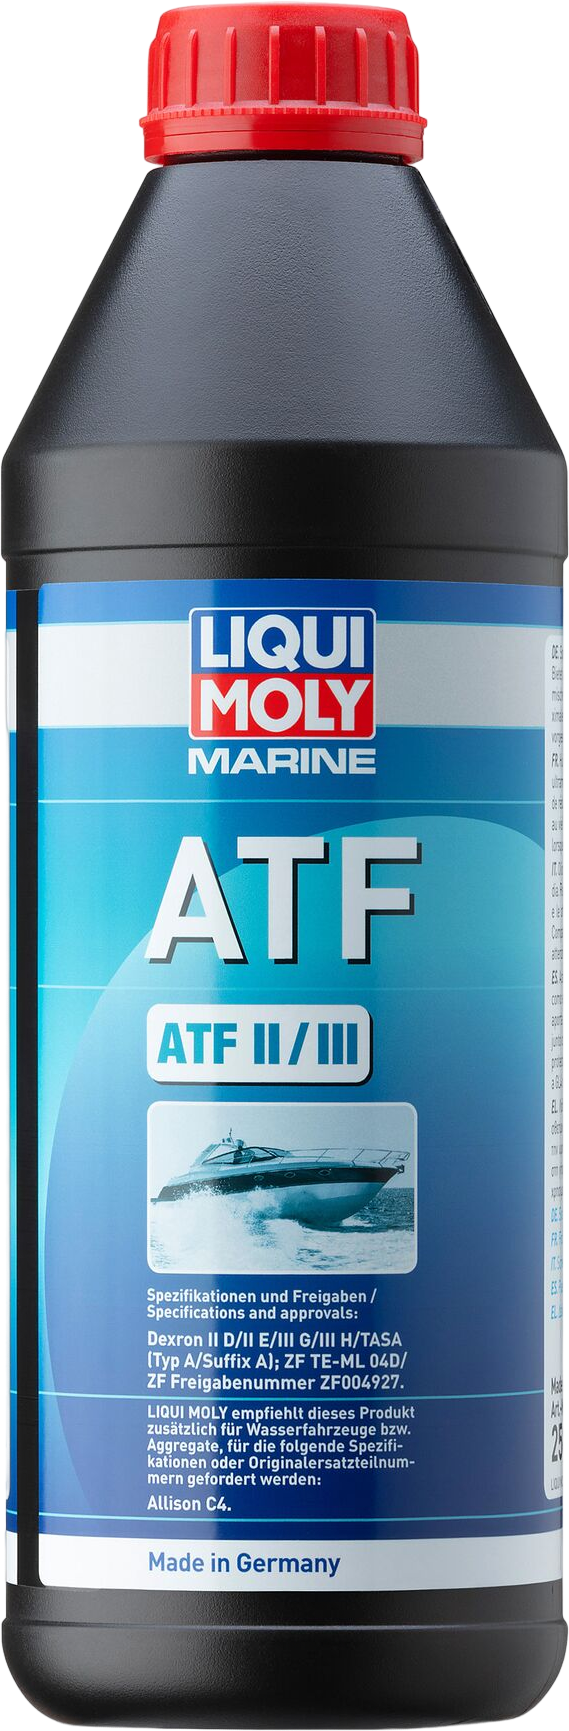 Liqui Moly Marine ATF, 6 x 1 lt detail 2